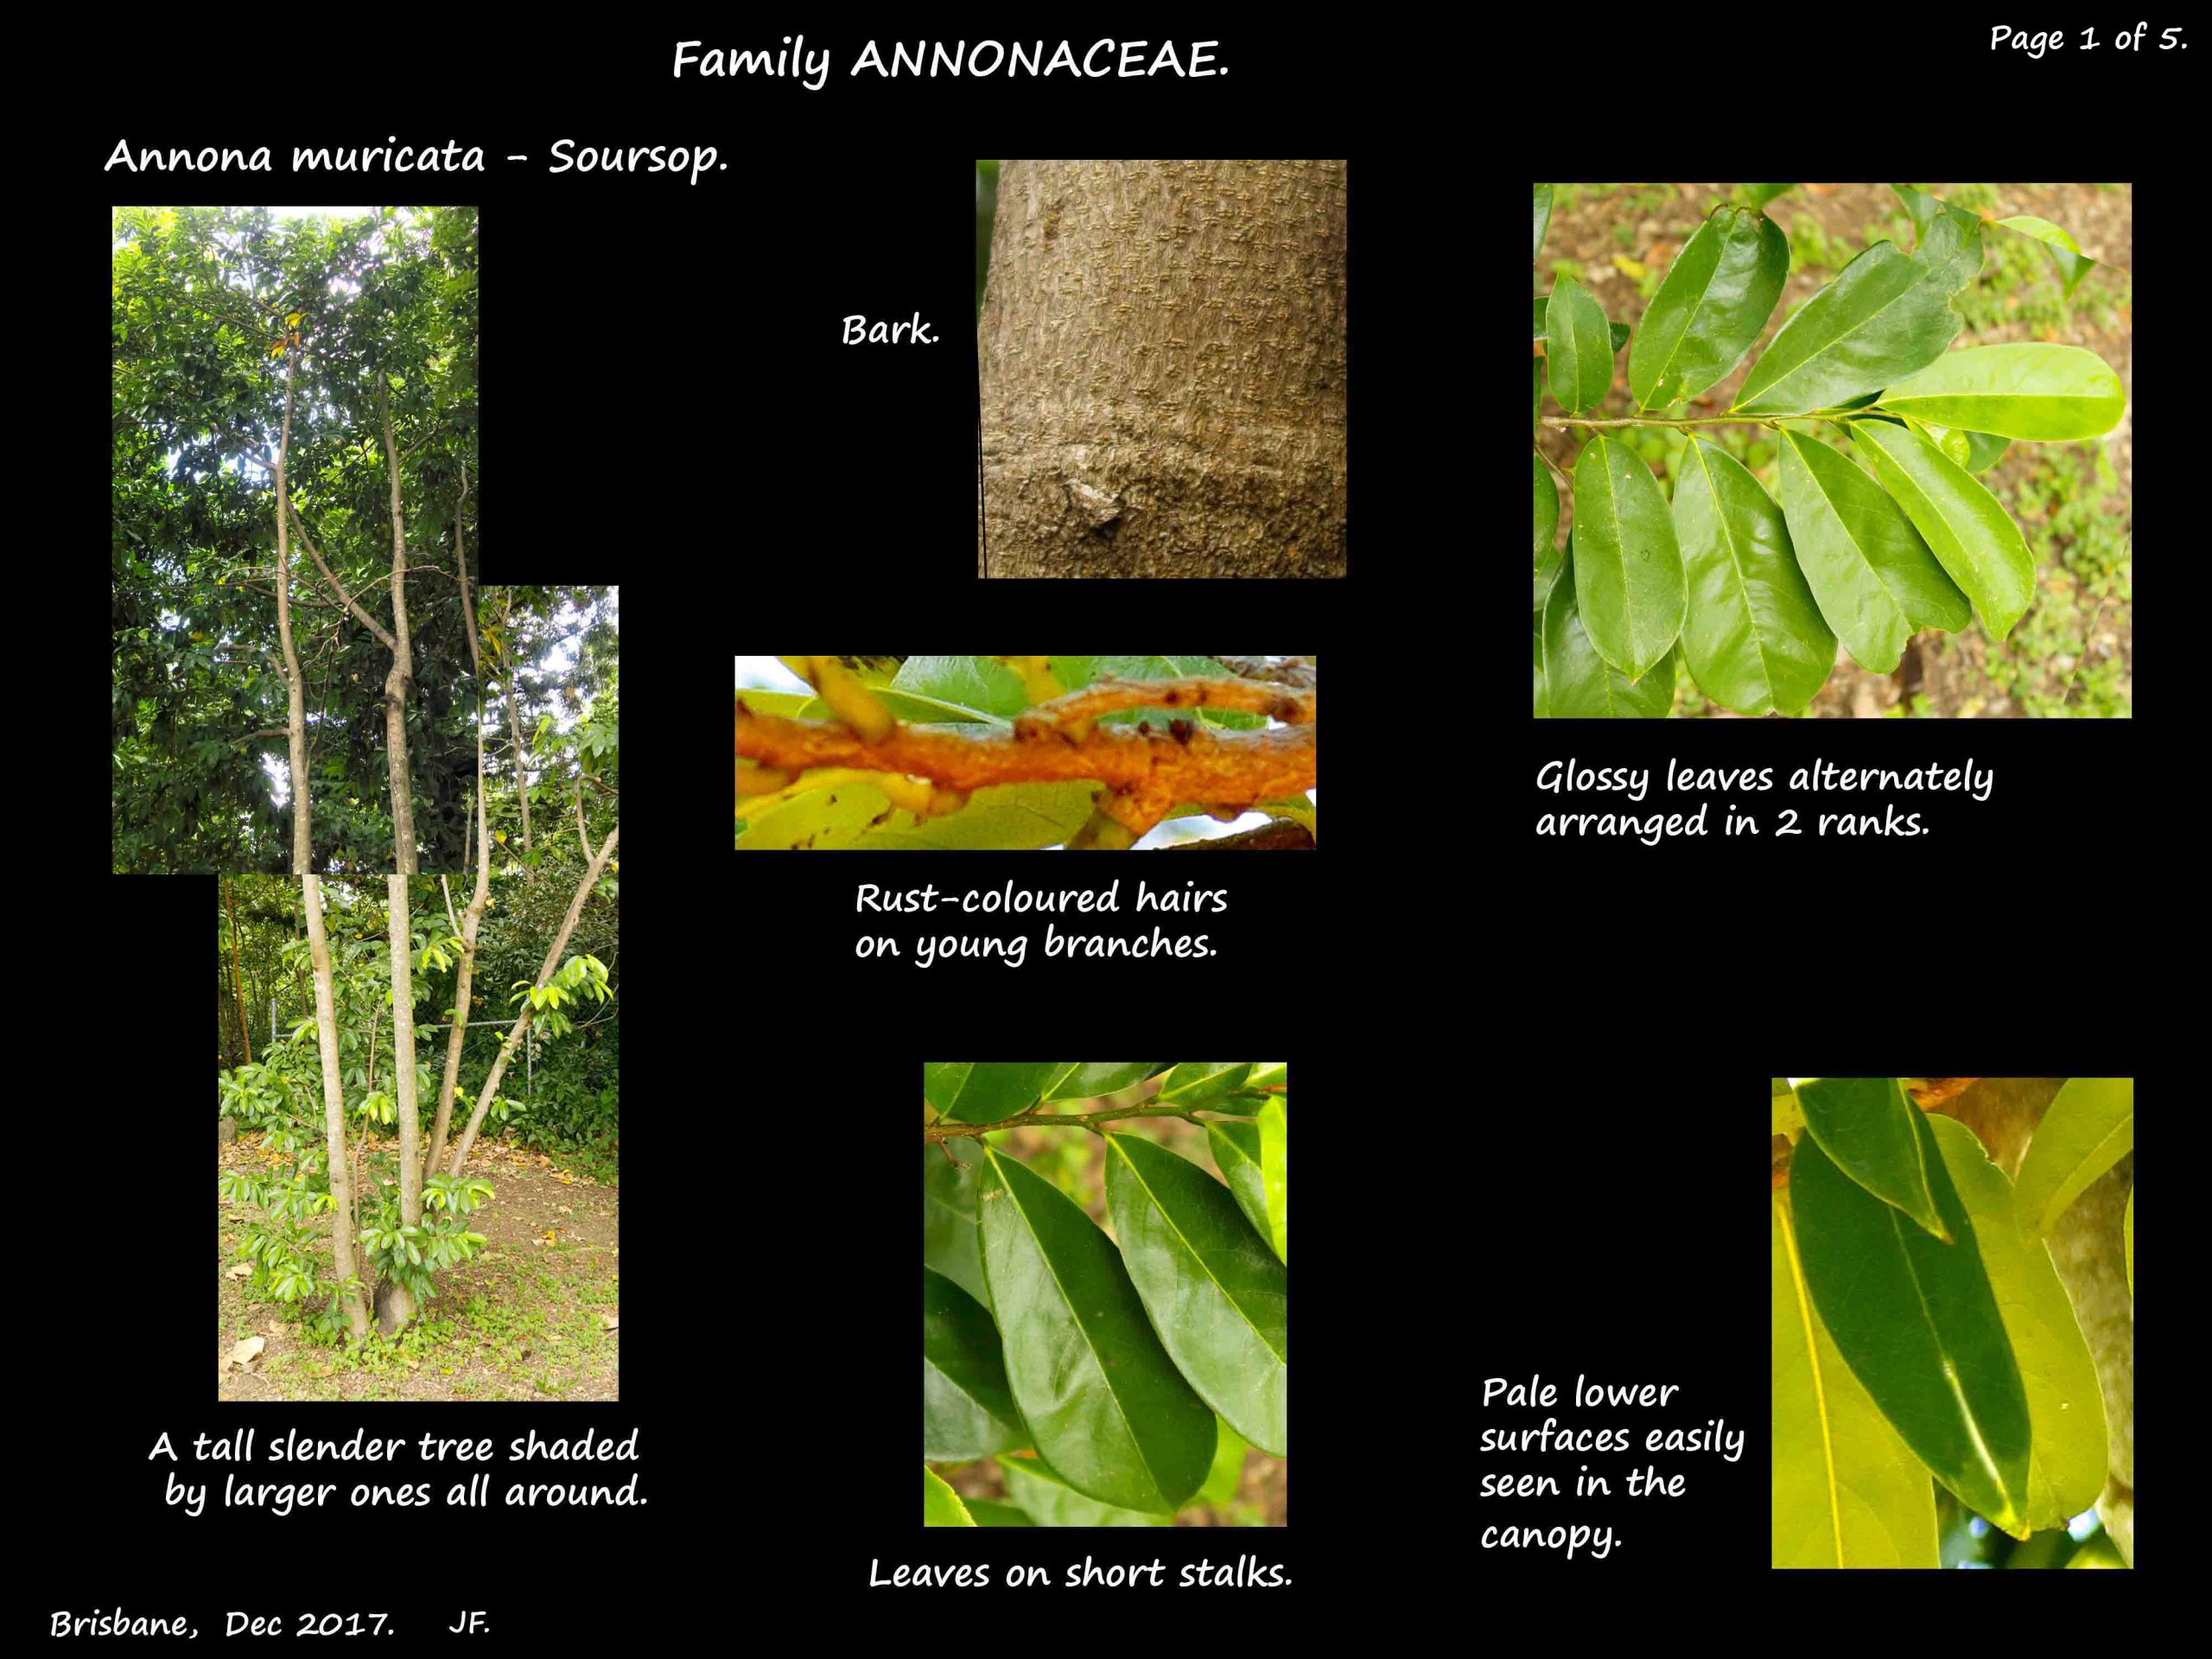 1 Annona muricata leaves